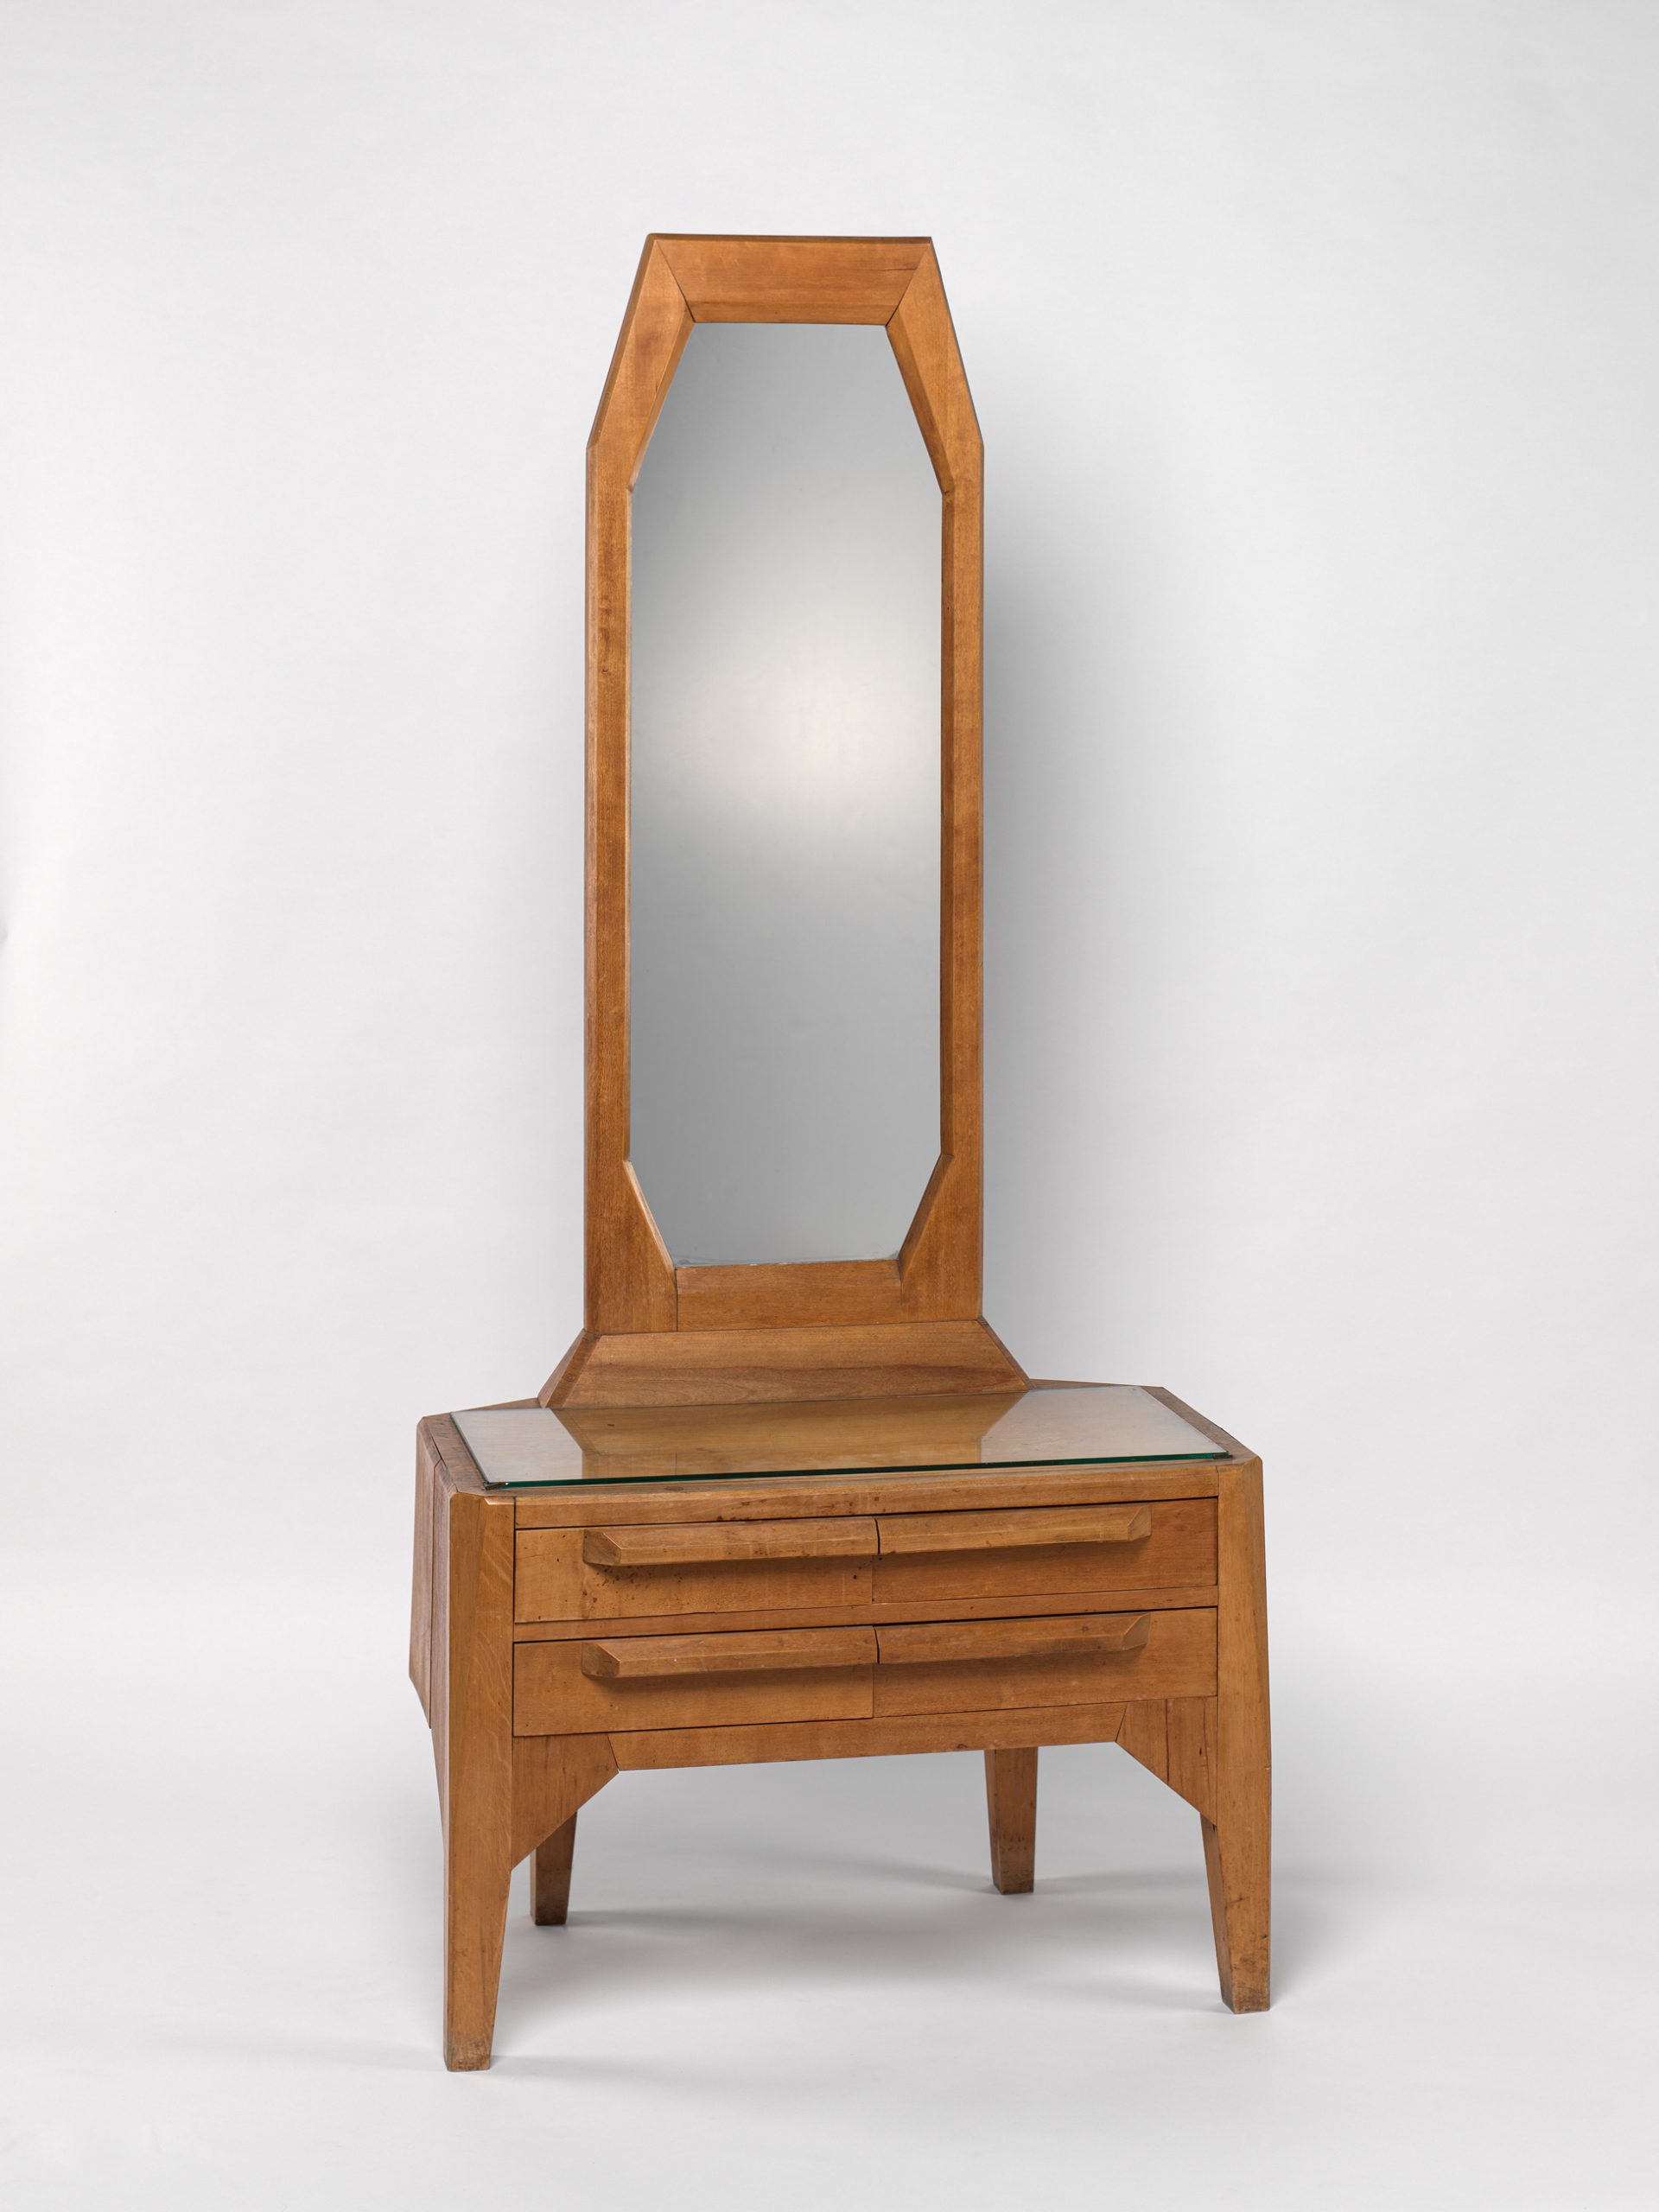 Felix Kayser - Toilette I., Material: wooden veneer, Period: anthroposophical style